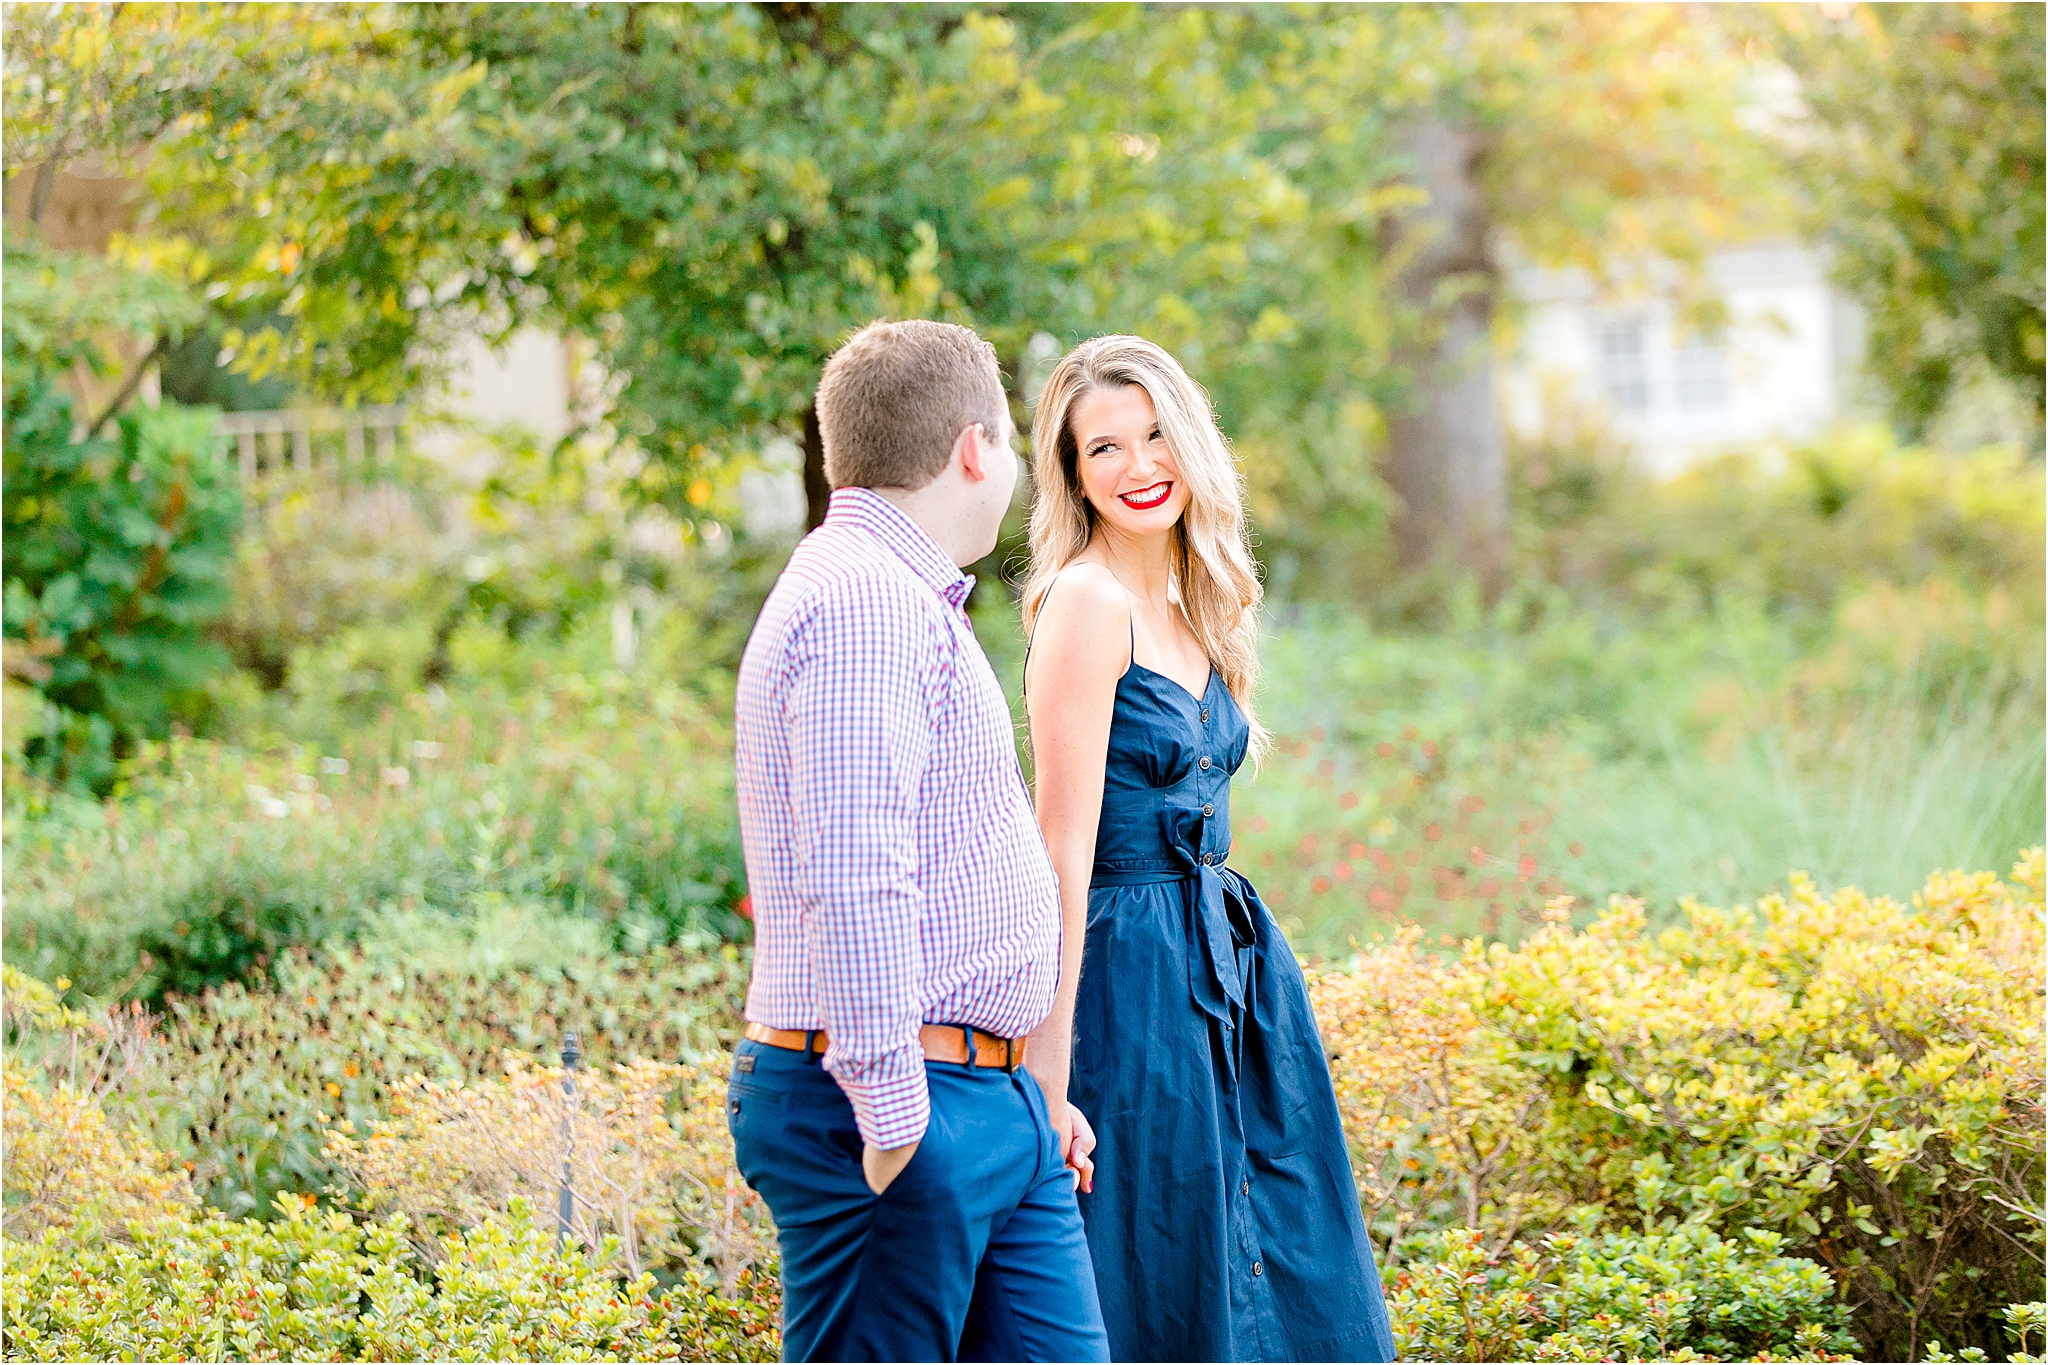 Summer Engagement Session in Highland Park Neighborhood by Dallas Wedding Photographer Jillian Hogan 